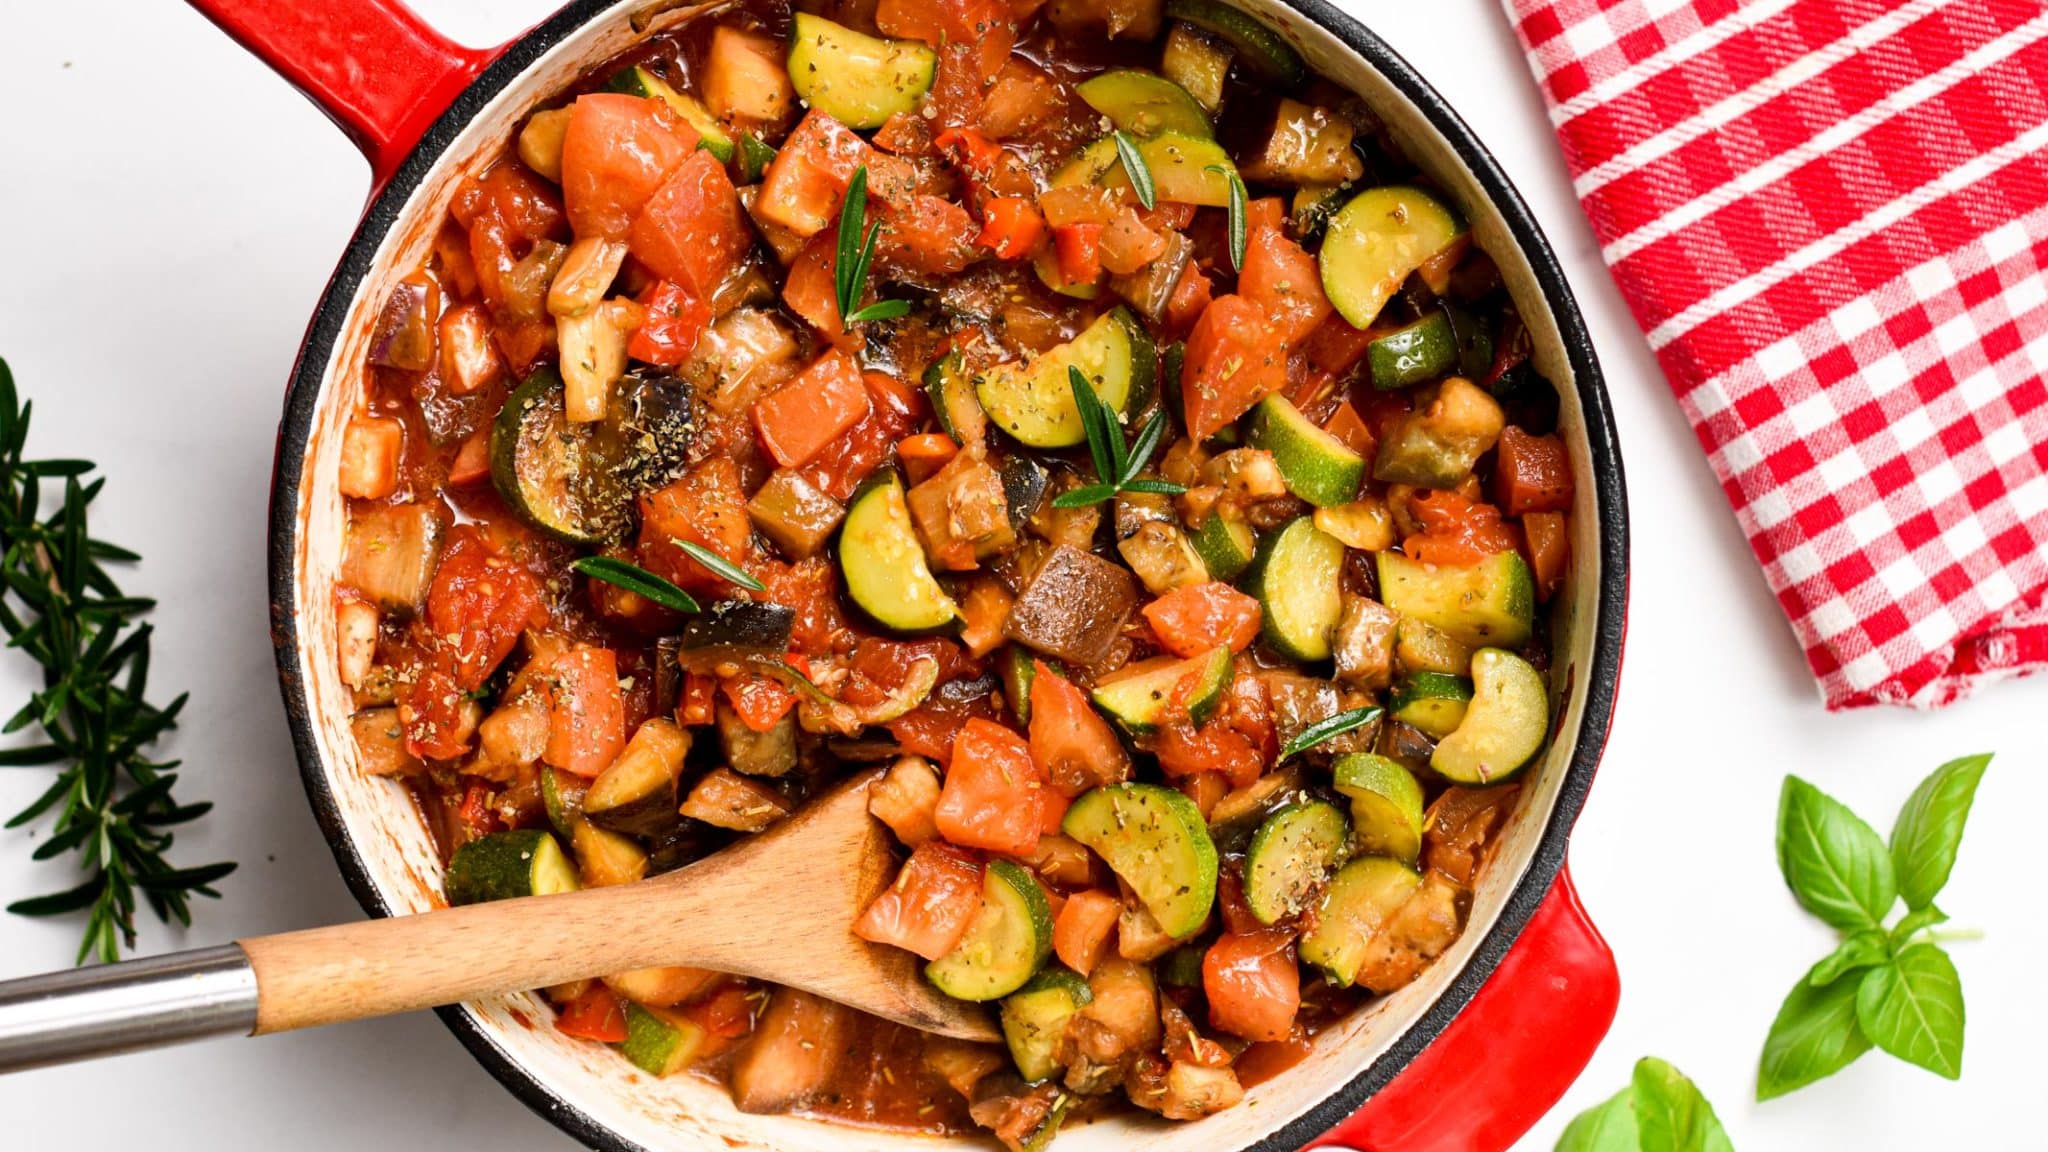 Easy One-Pot Ratatouille Recipe - Classic French Vegan + Gluten Free